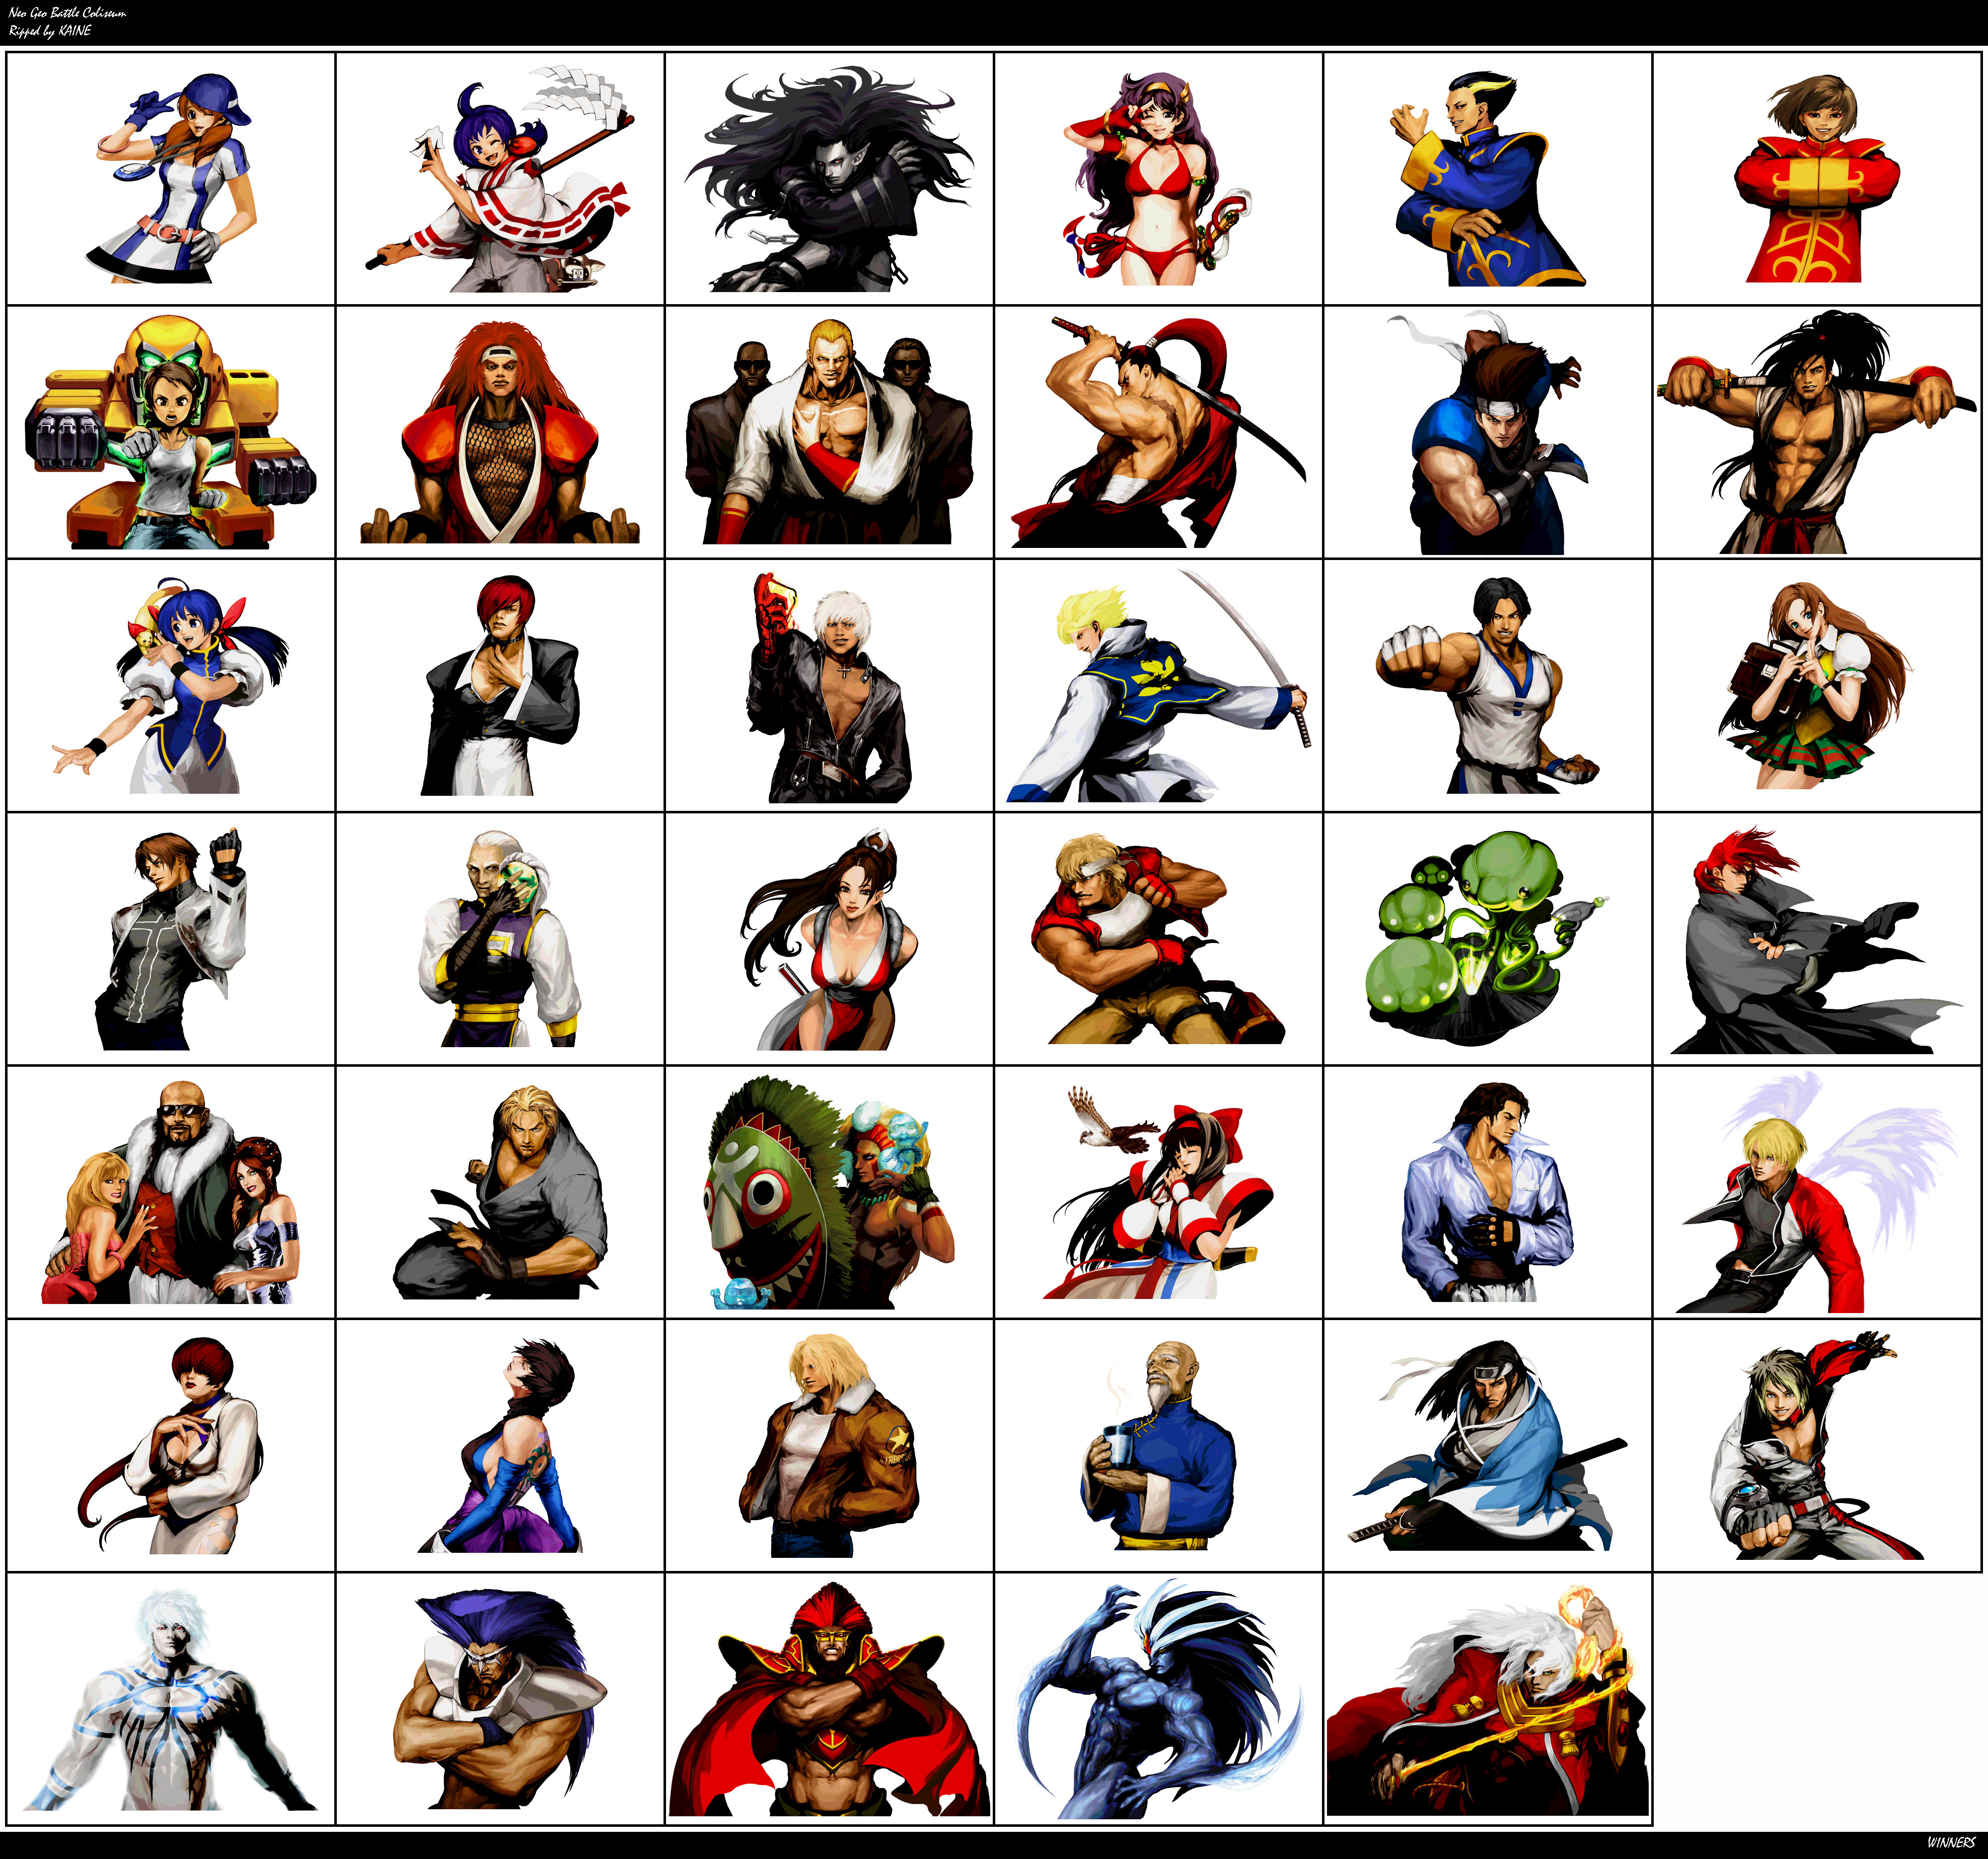 Neo Geo Battle Coliseum - Wikipedia